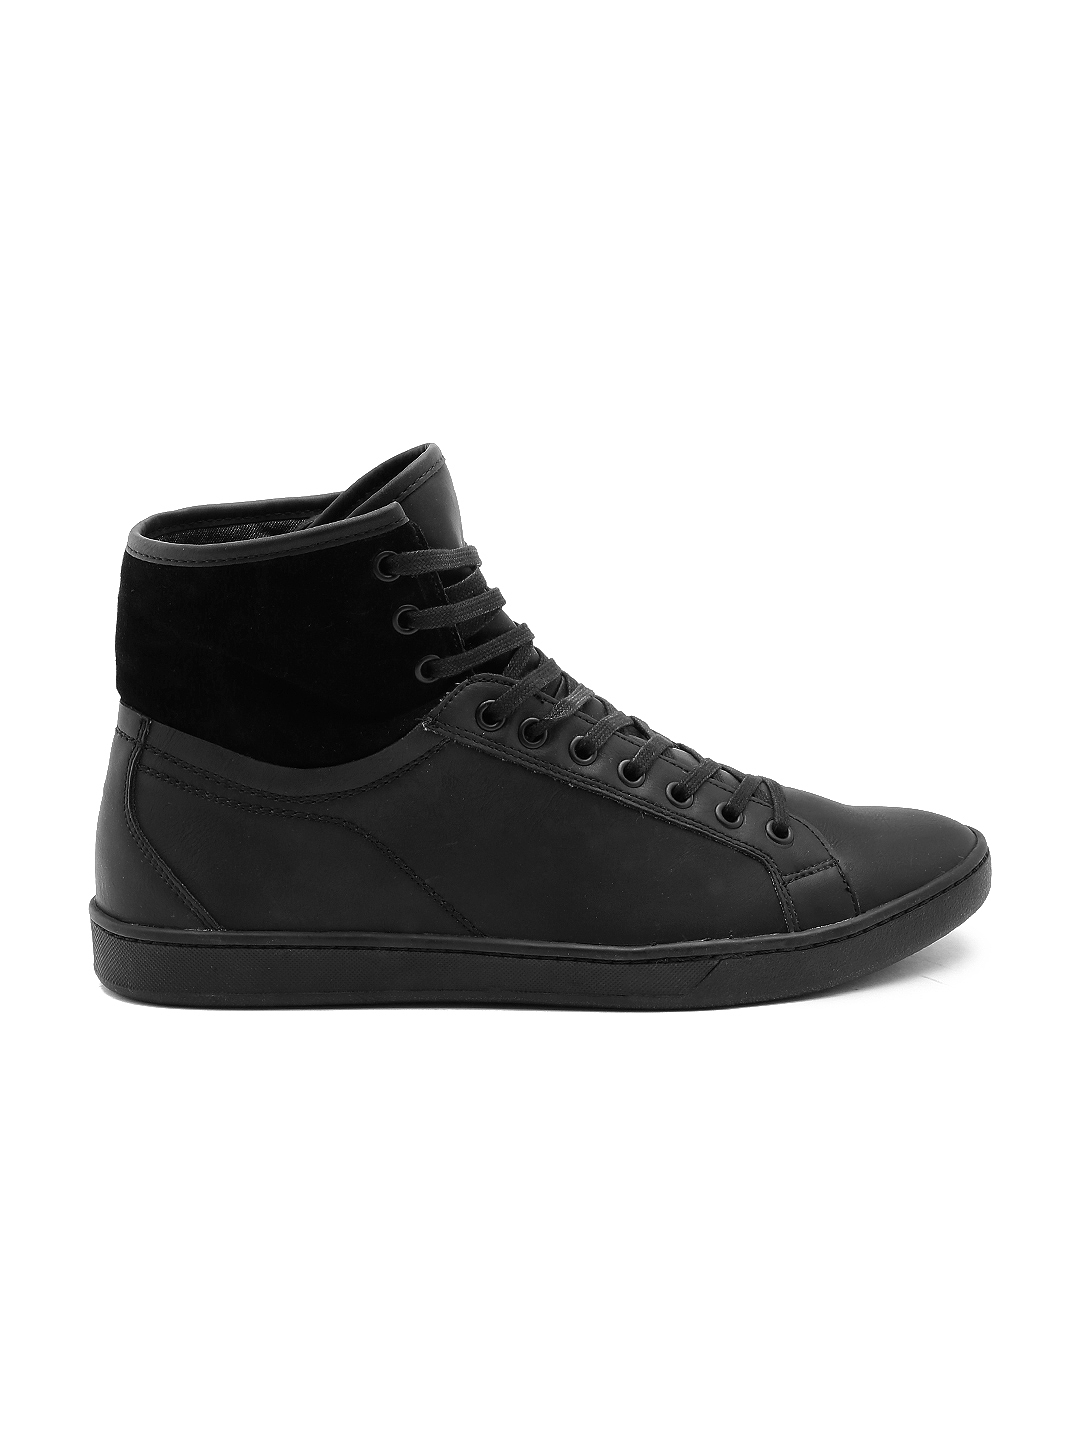 Buy ALDO Men Black Solid High Top Sneakers - Casual Shoes for Men ...